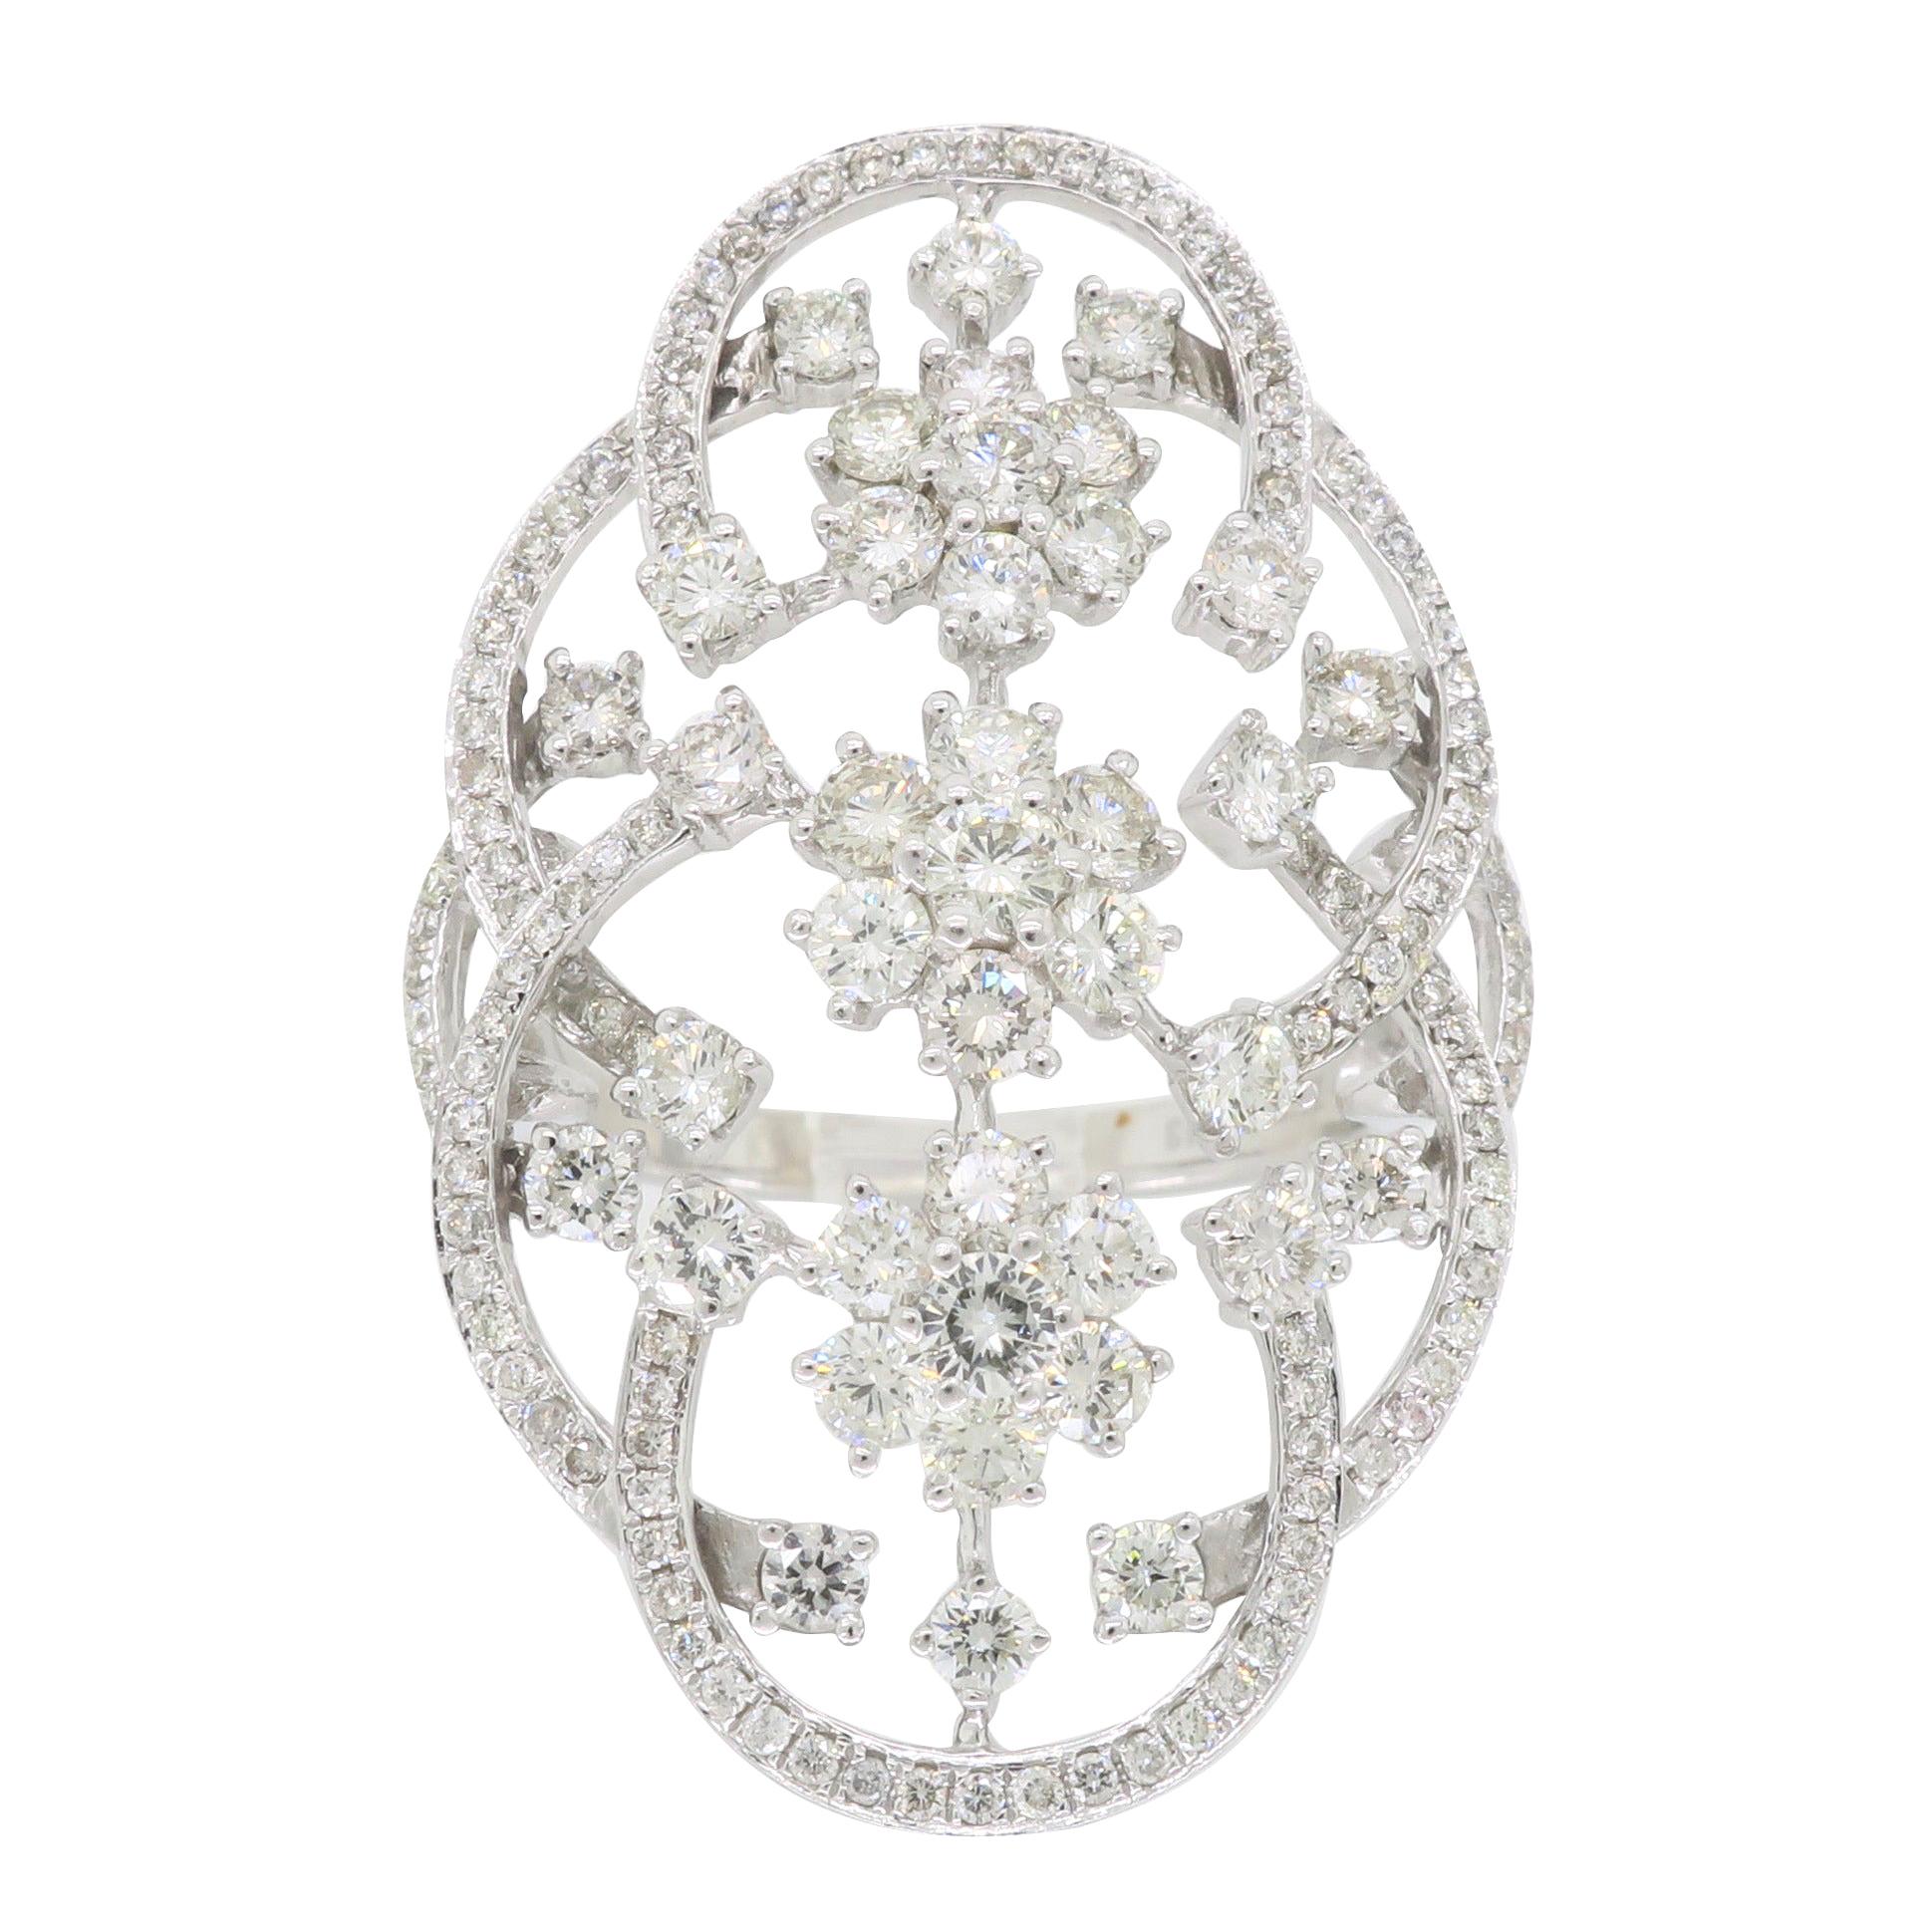 Floral Navette Style Diamond Ring in 18 Karat White Gold